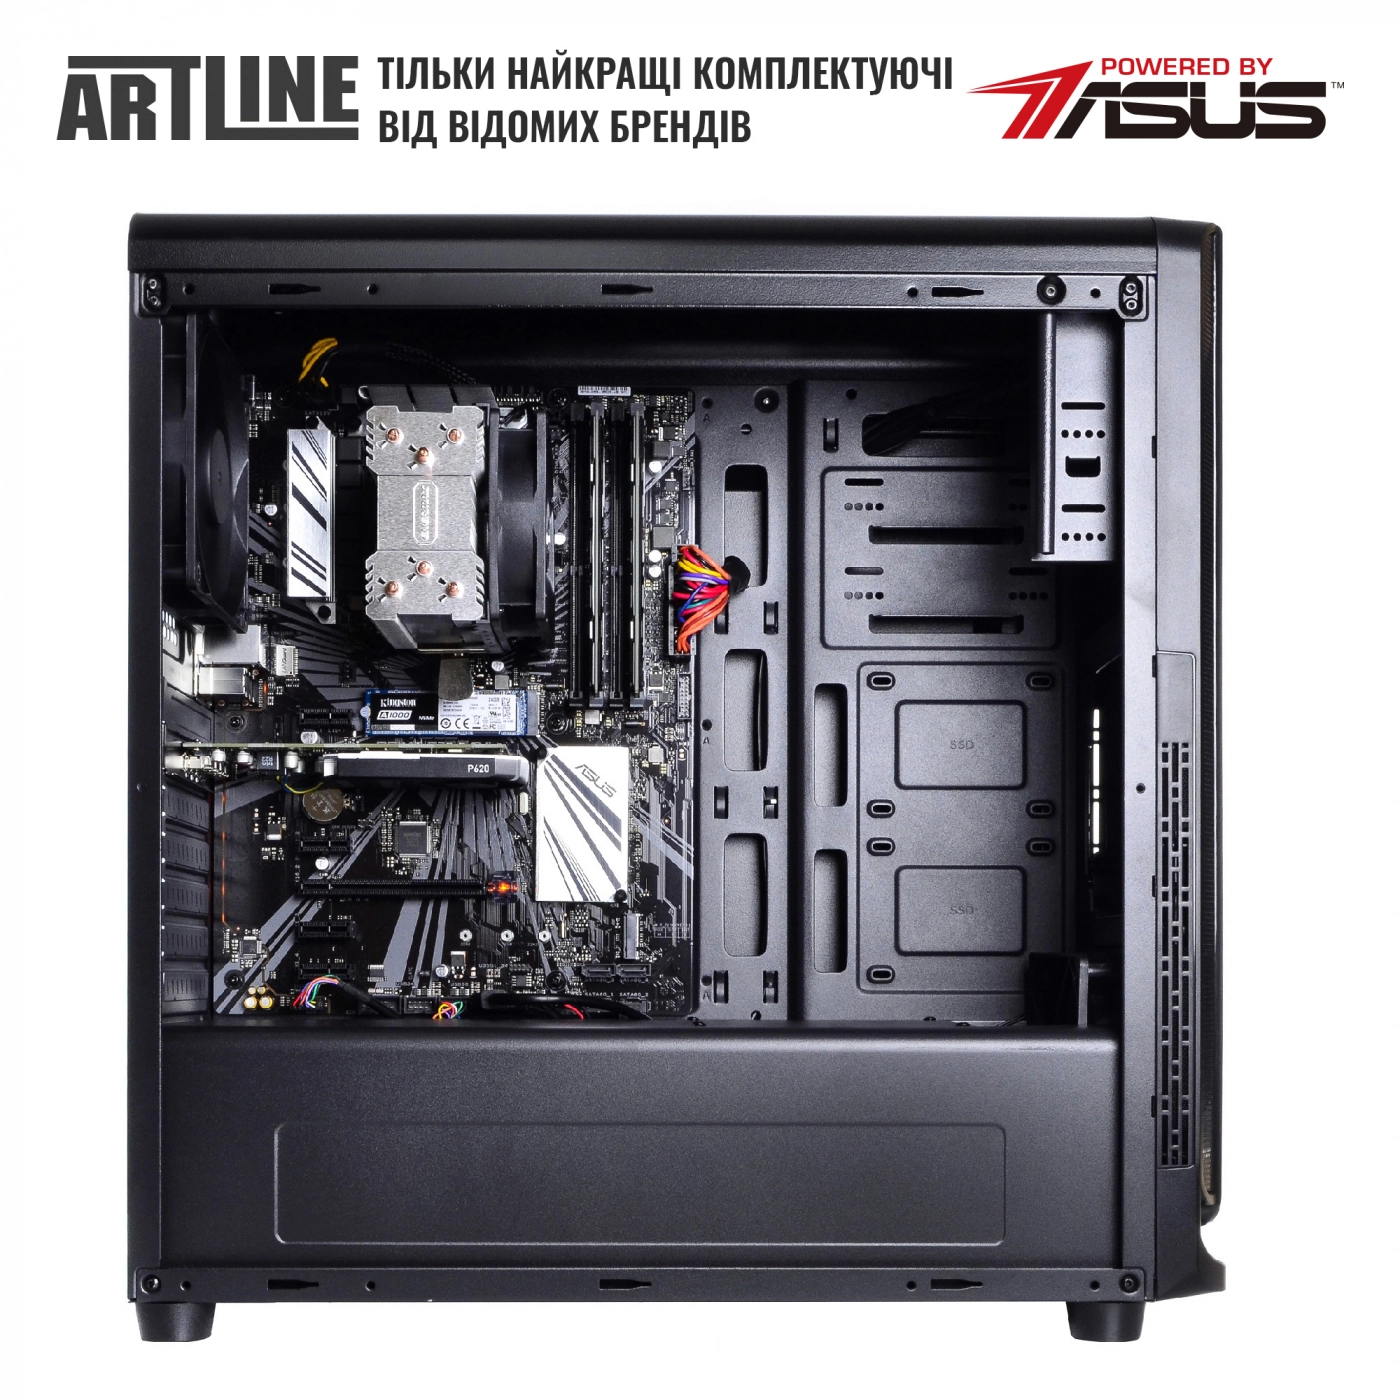 Купити Сервер ARTLINE Business T61v09 - фото 5